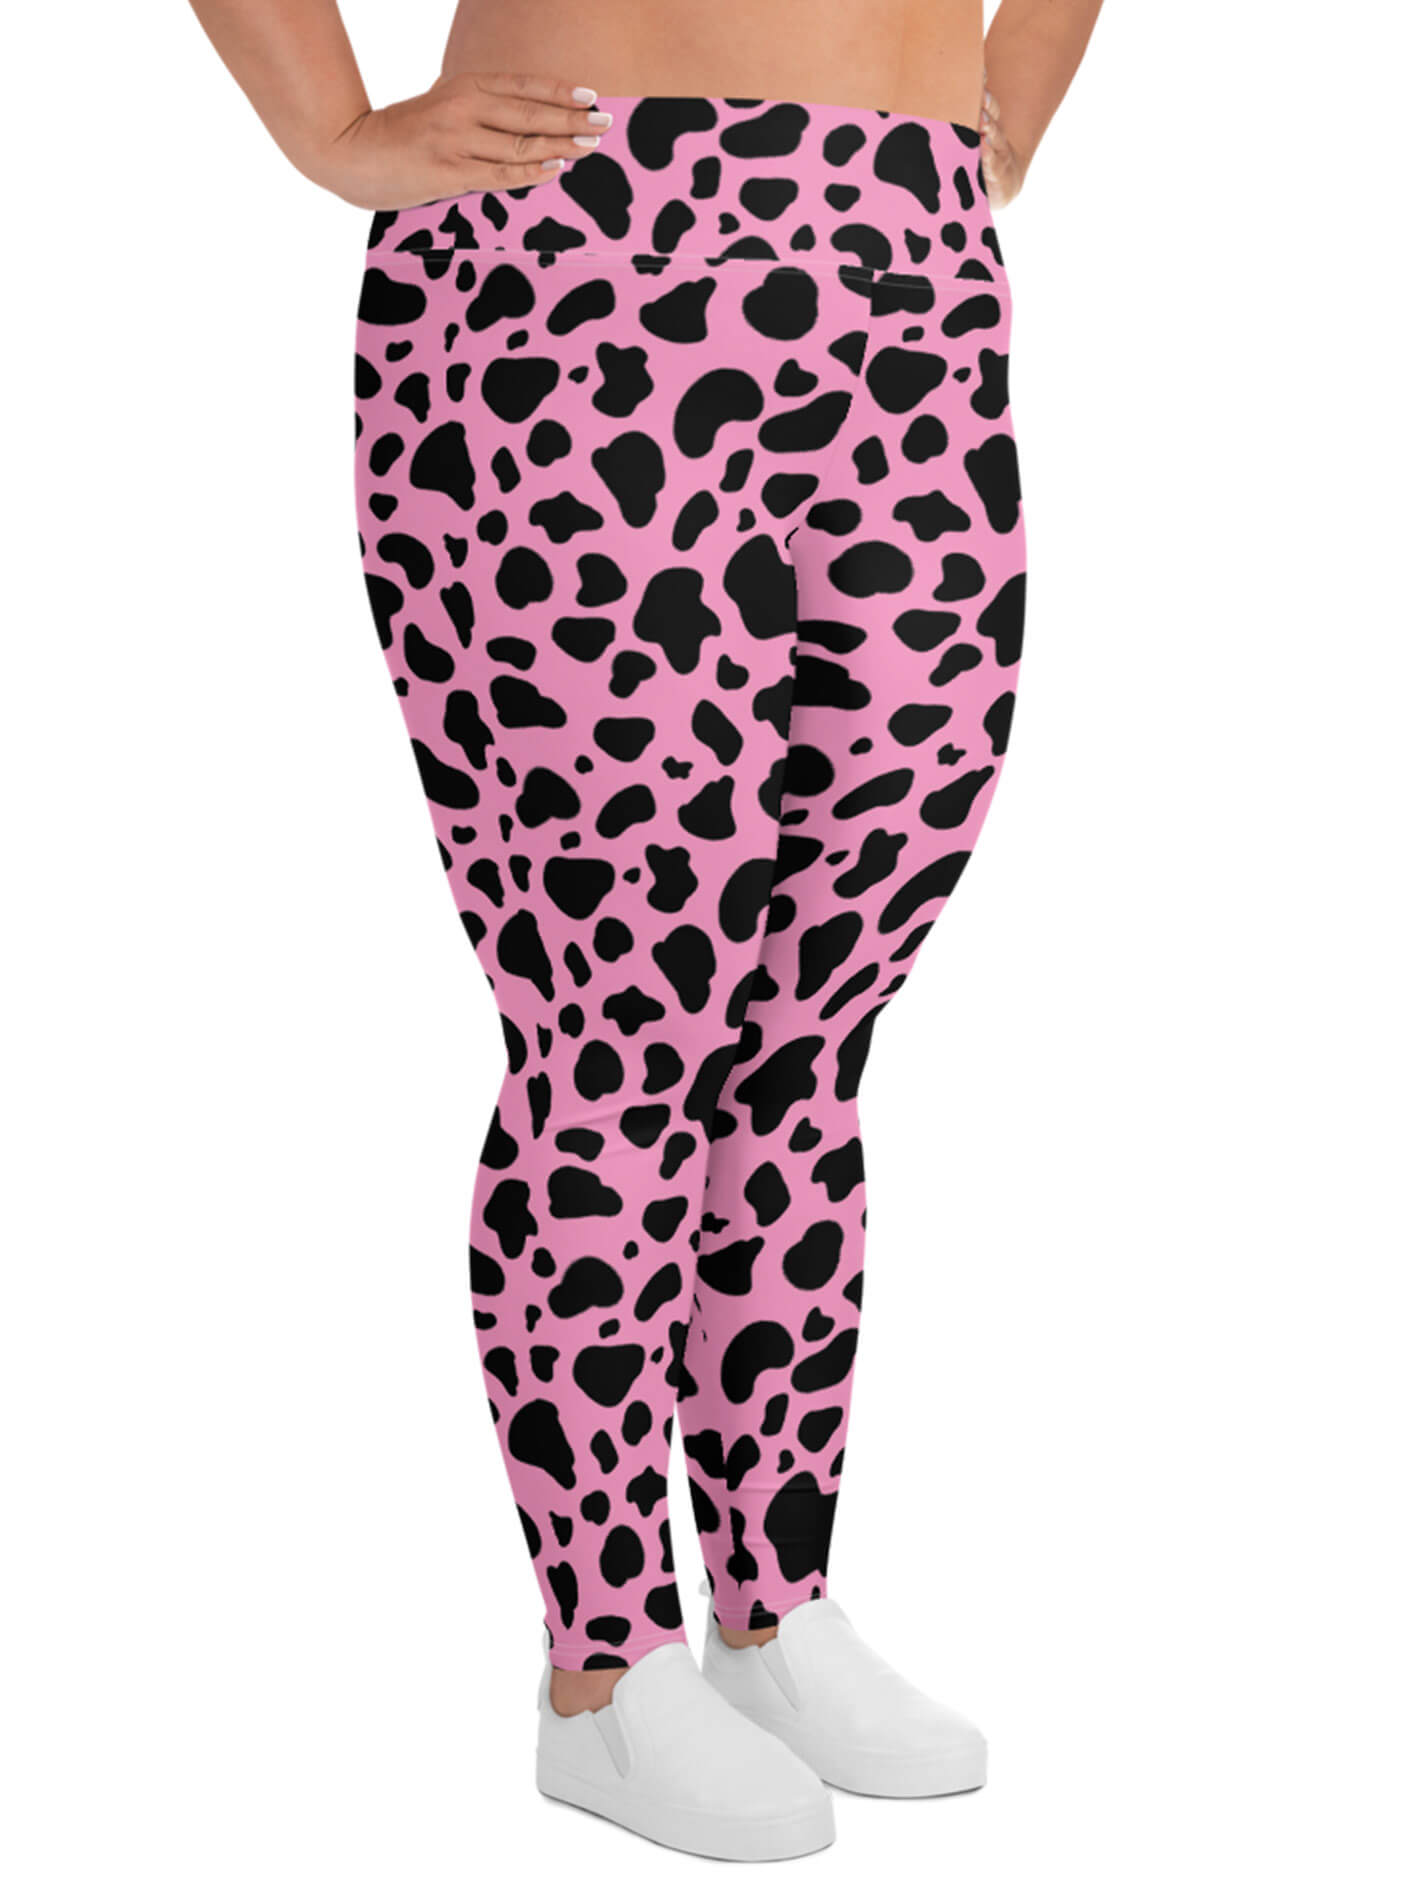 Pink cow print plus size leggings.